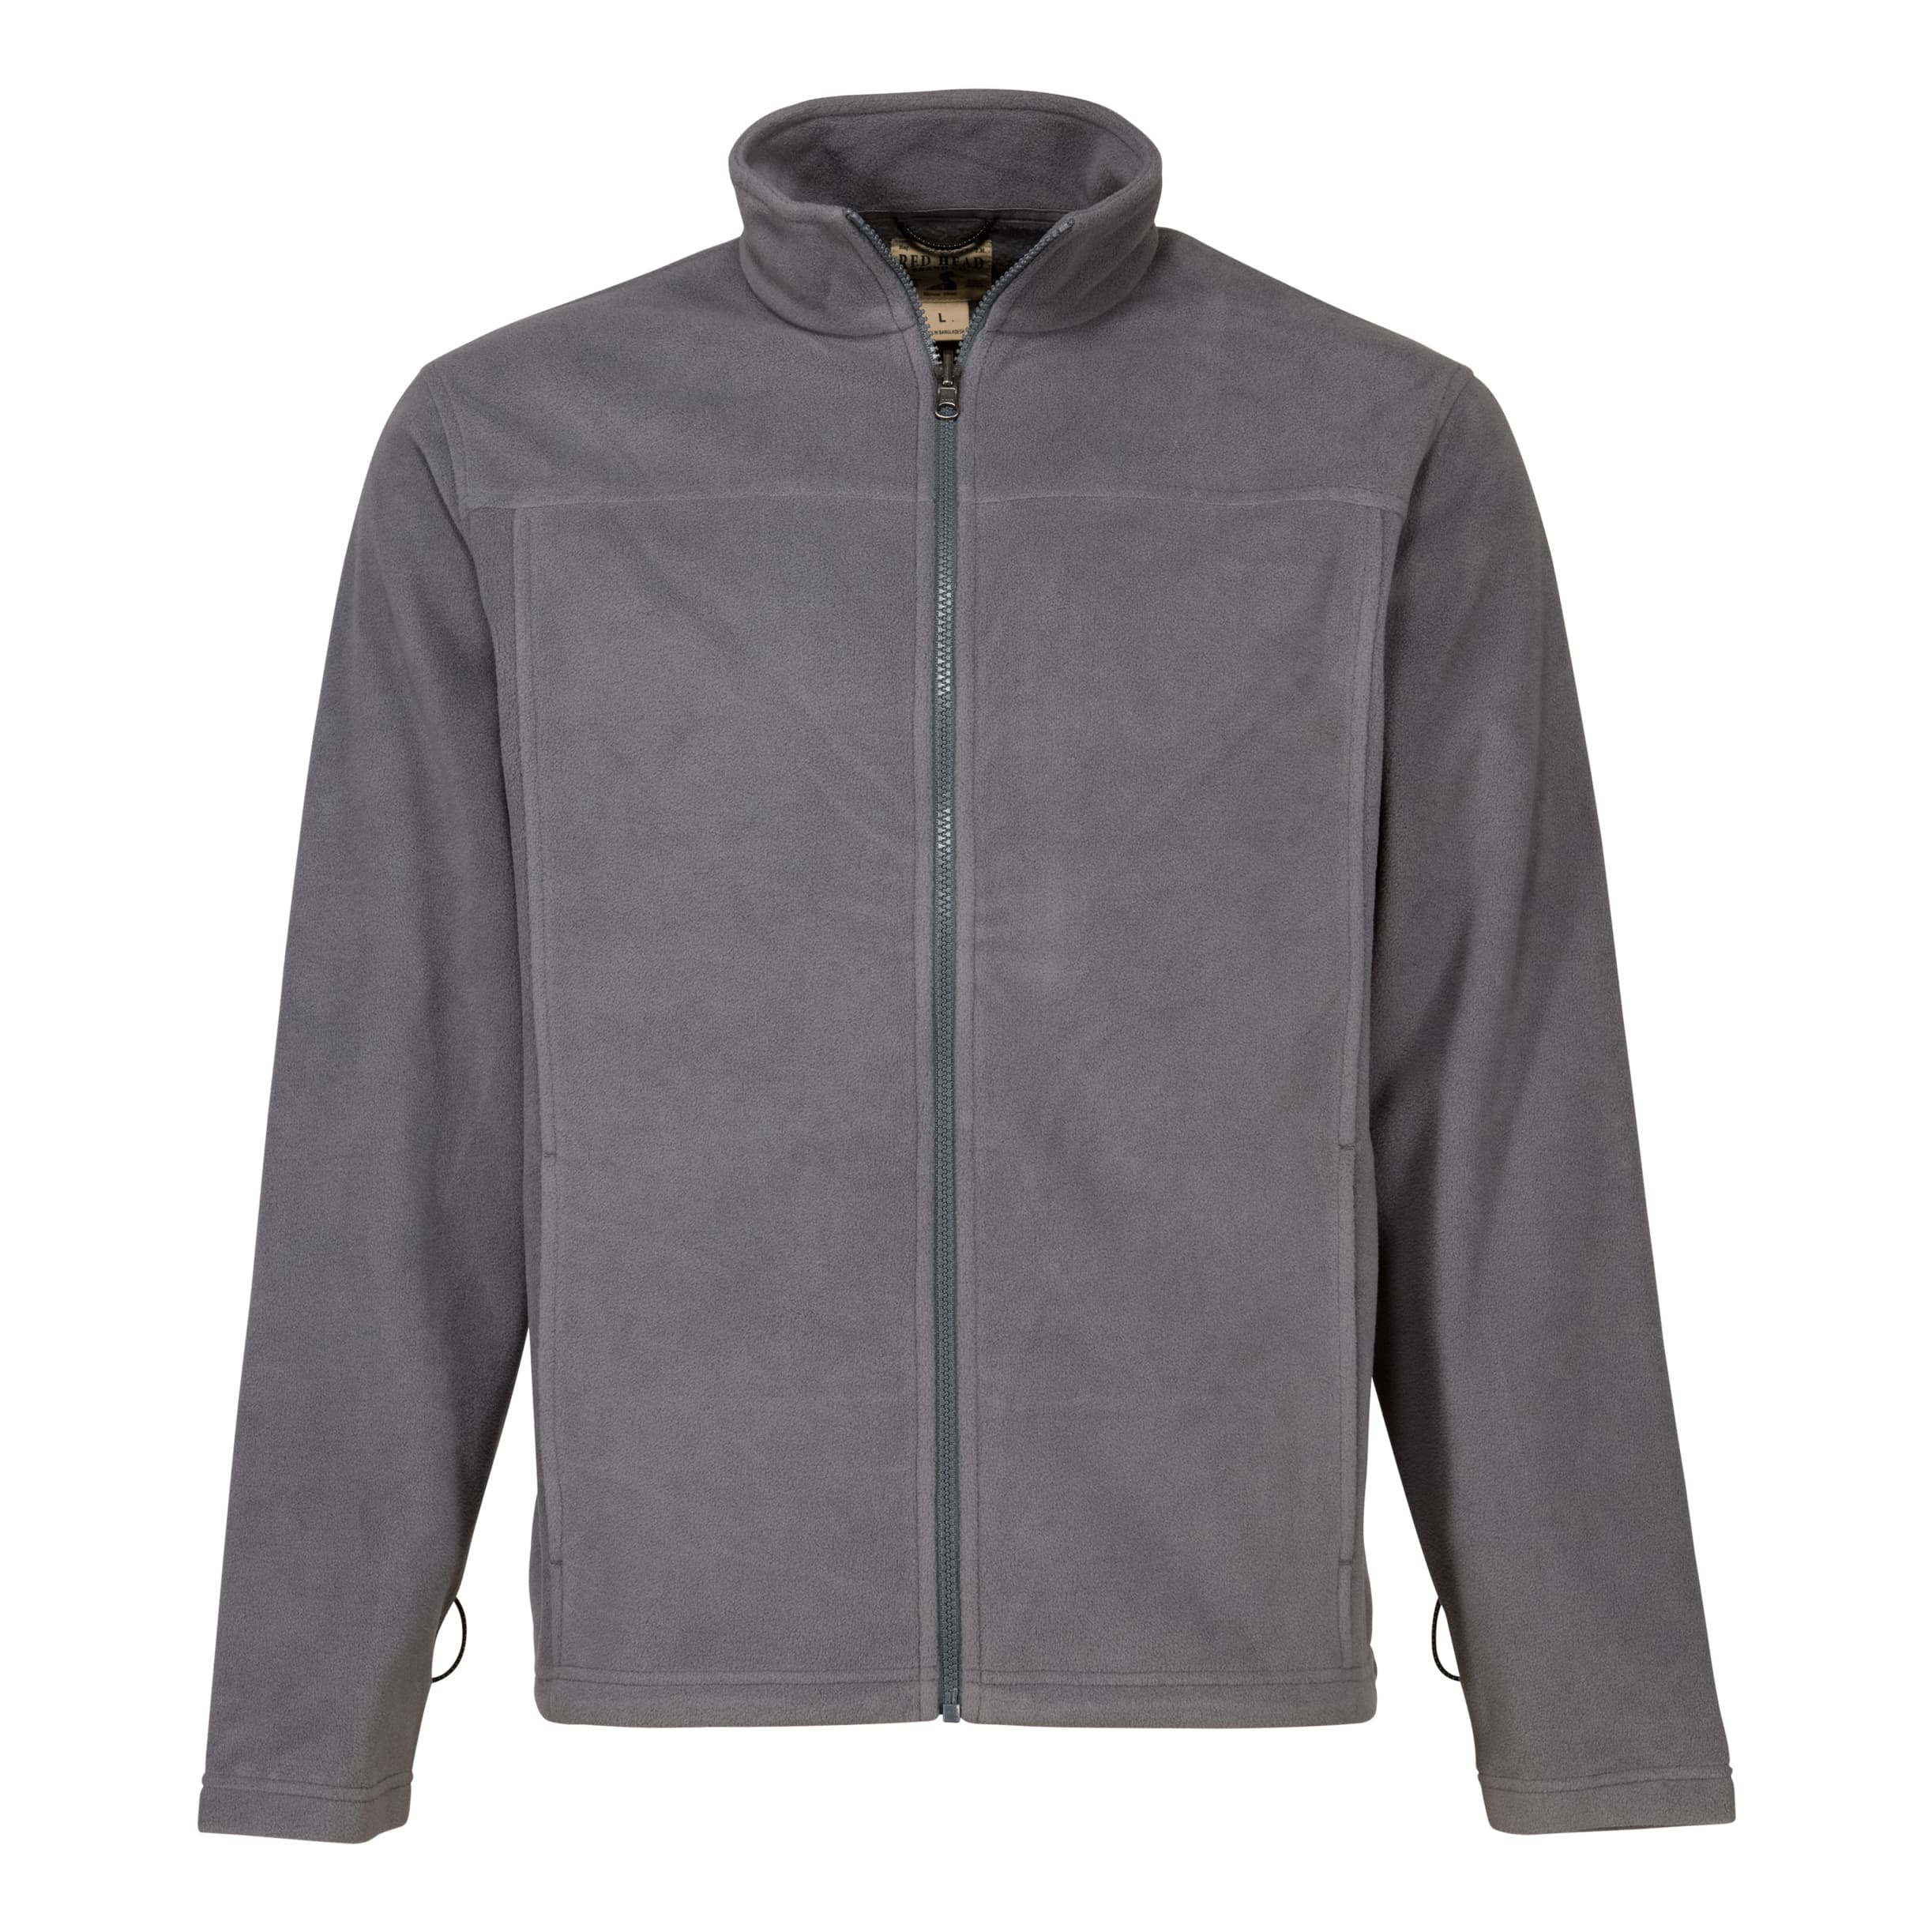 RedHead® Men’s Radius Softshell Systems Jacket - Blue/Grey - inner jacket